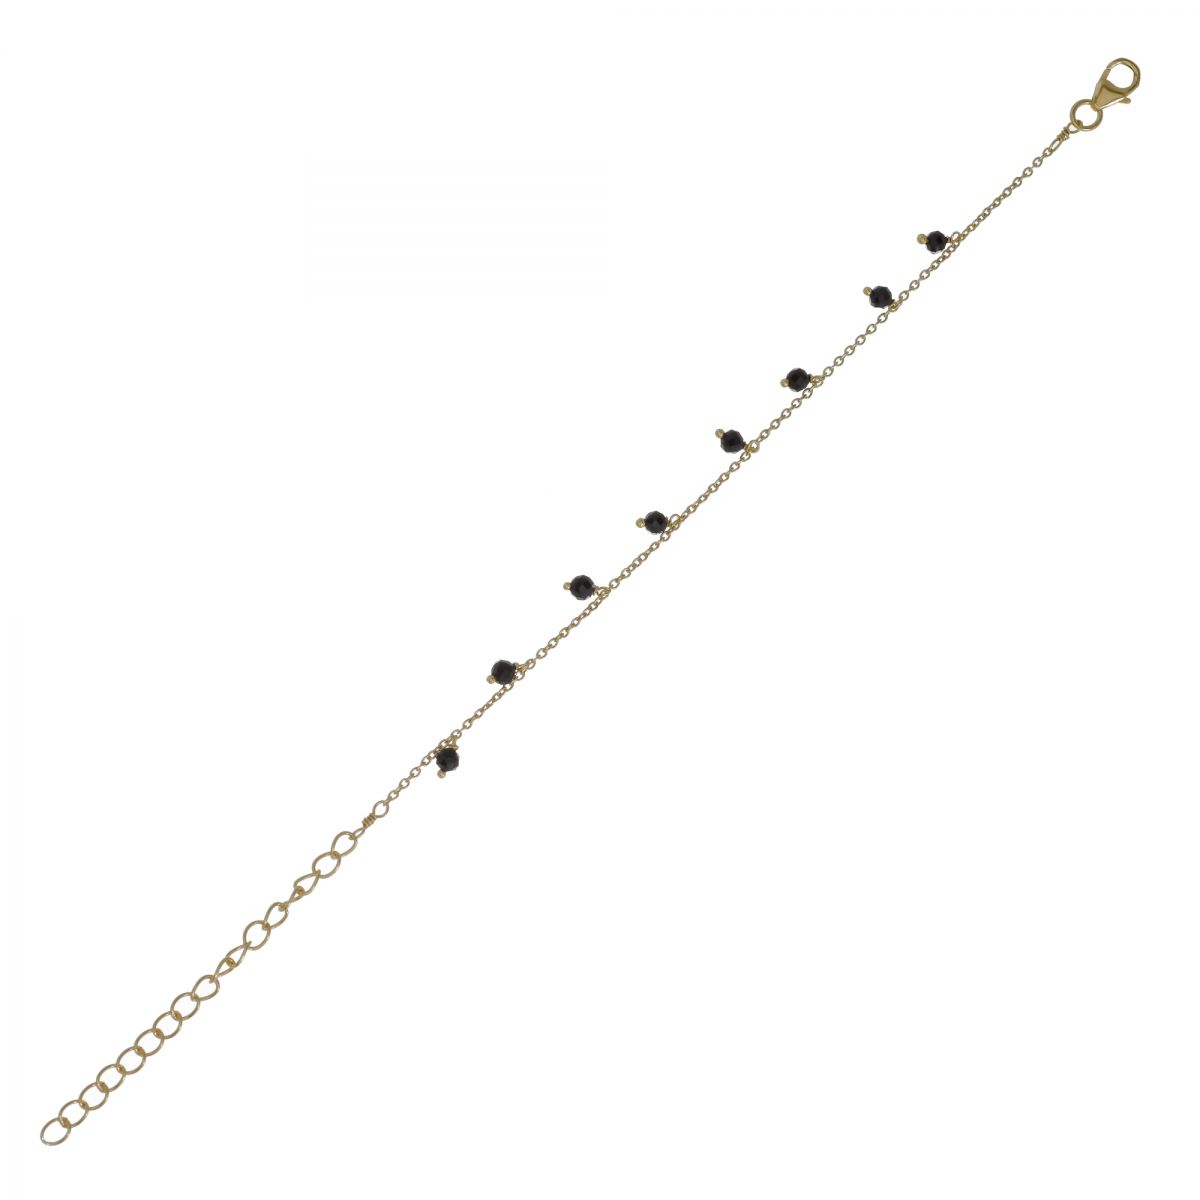 ff bracelet 3mm 8 pendants black agate beads gold plated